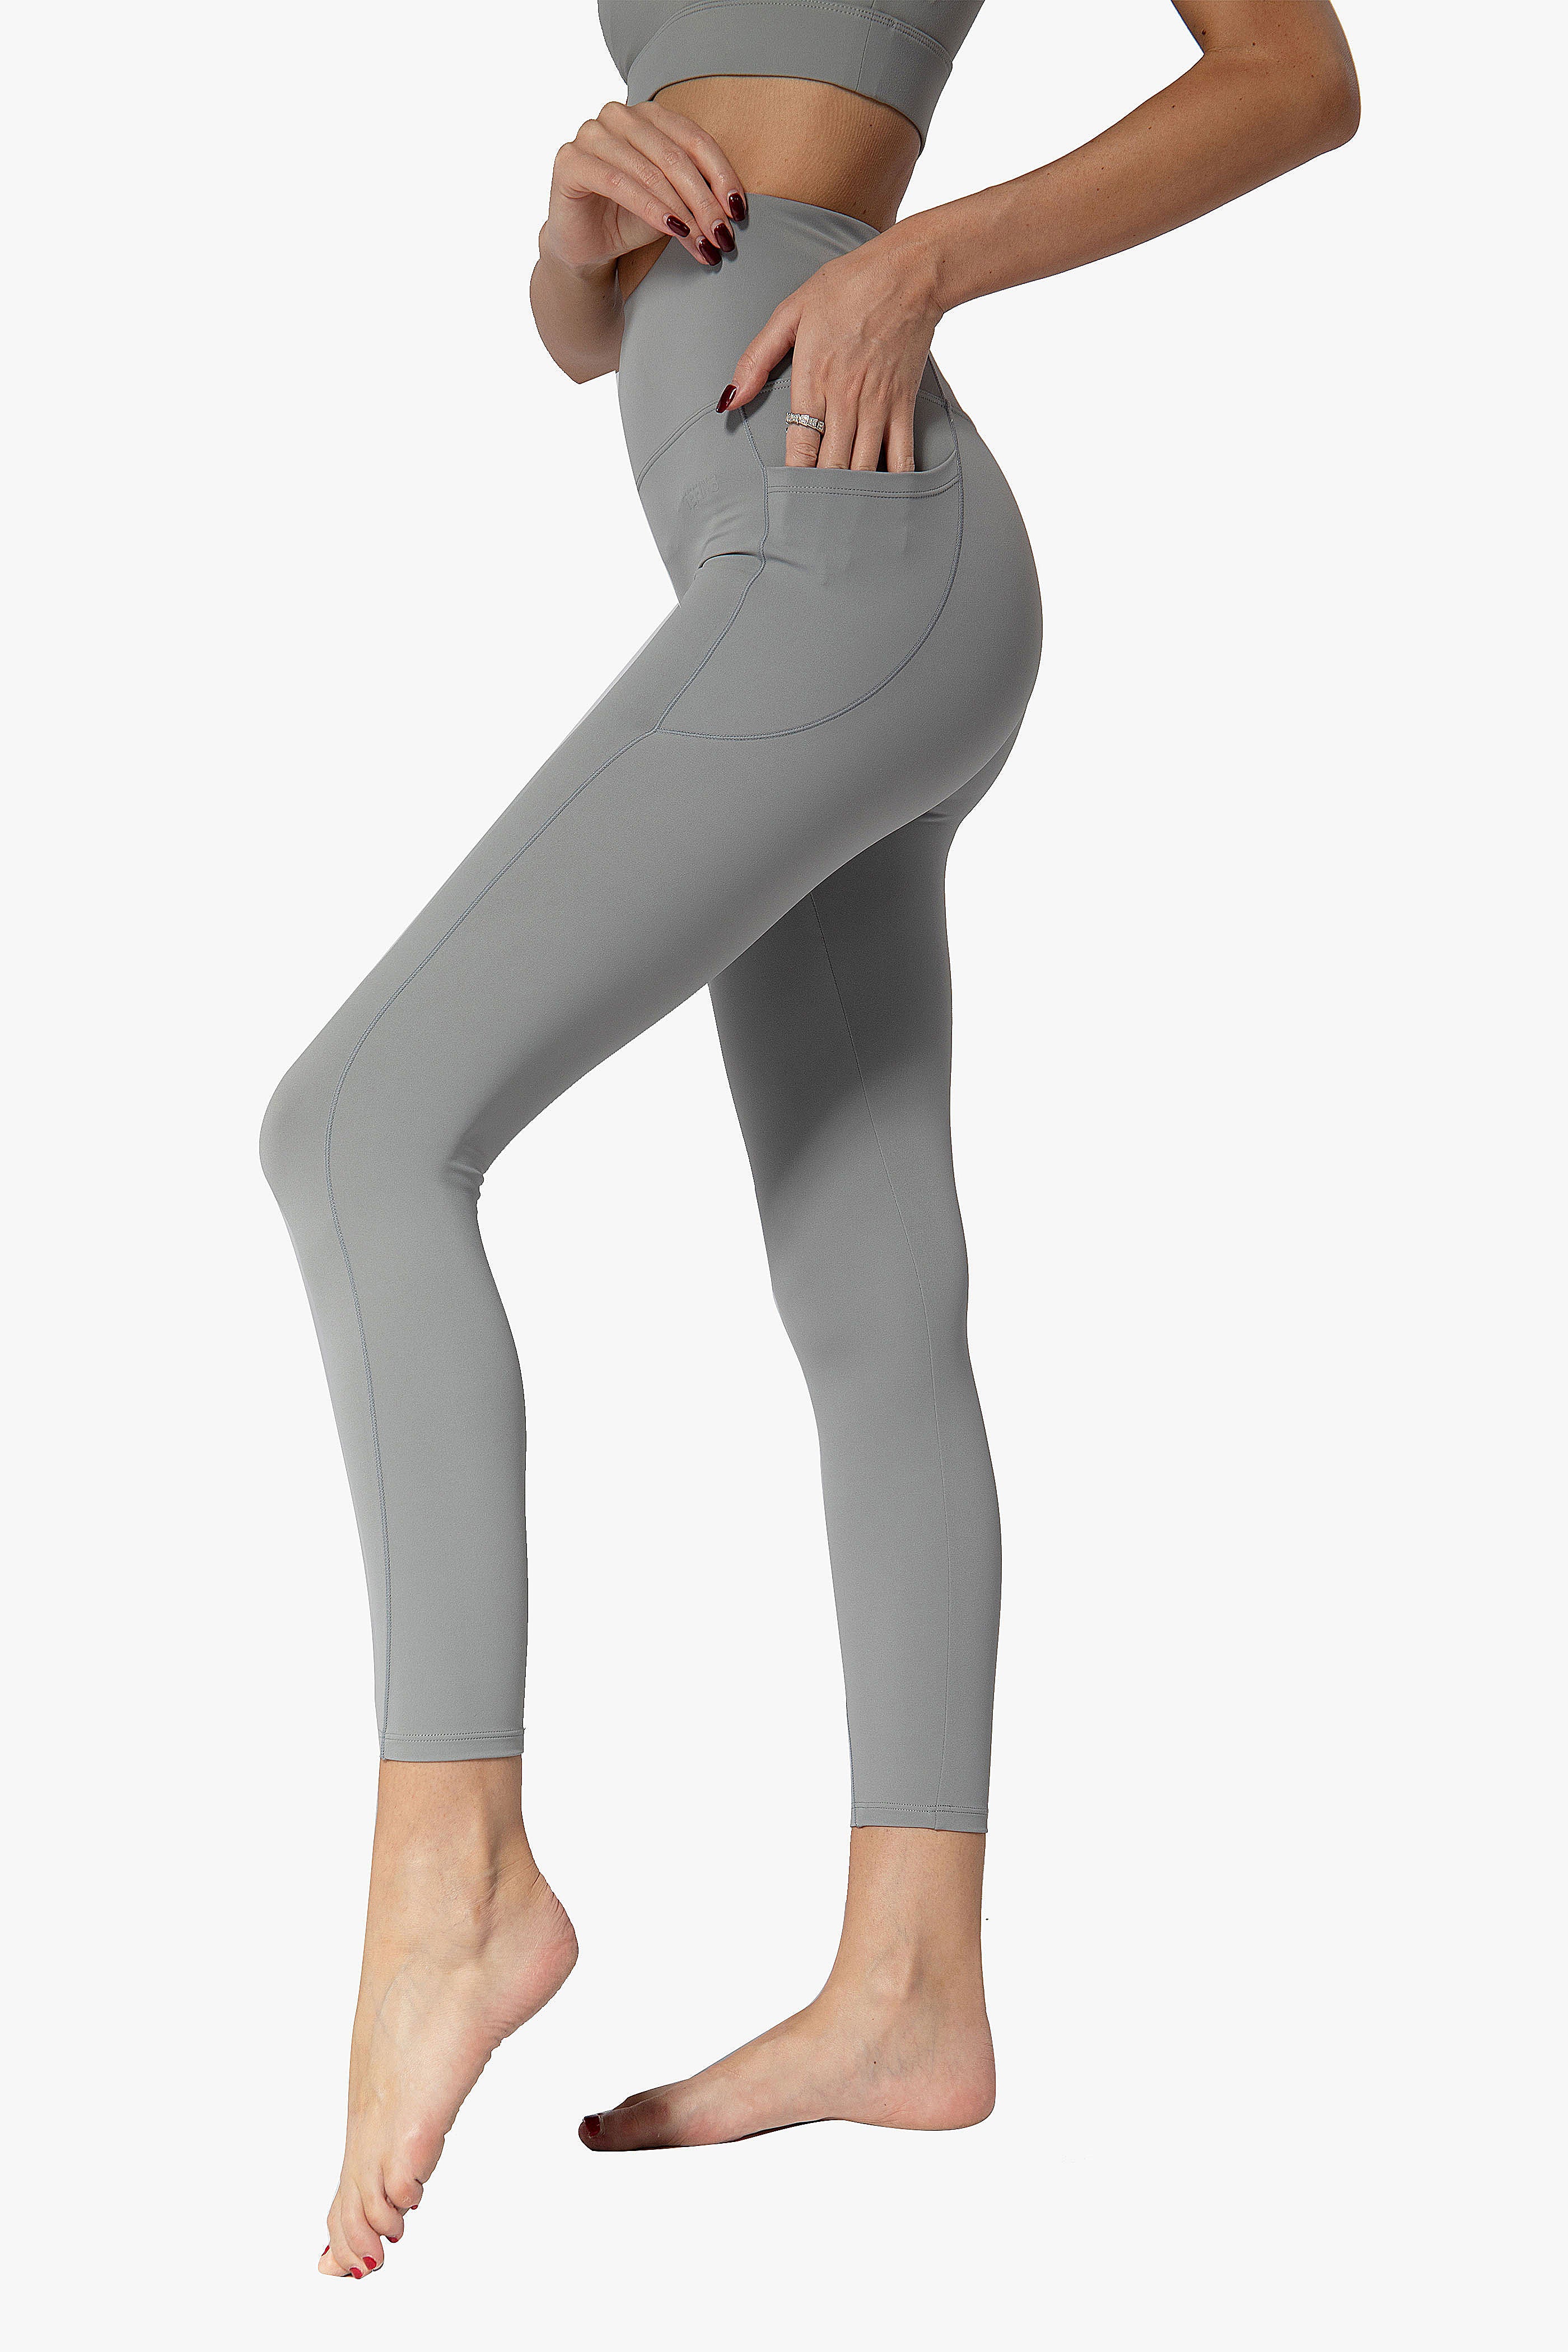 SALE! Silver Grey Cassi Side Pockets Workout Leggings Yoga